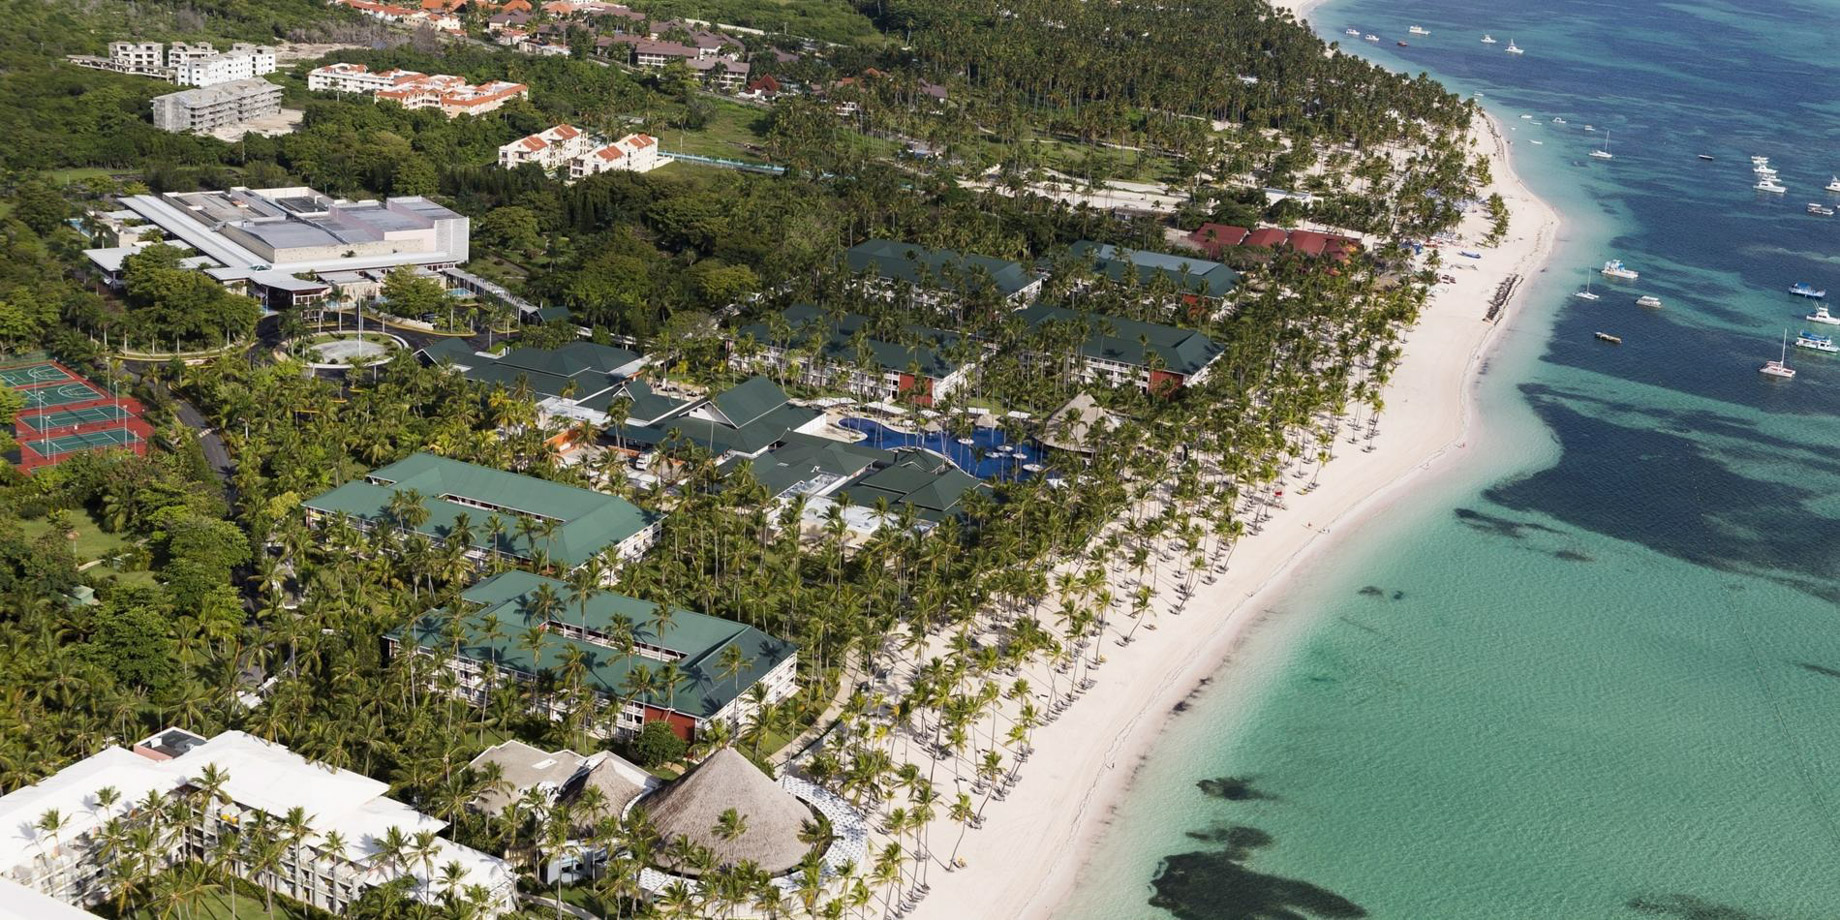 Barceló Bávaro Beach Hotel Grand Resort - Punta Cana, Dominican Republic - Aerial View